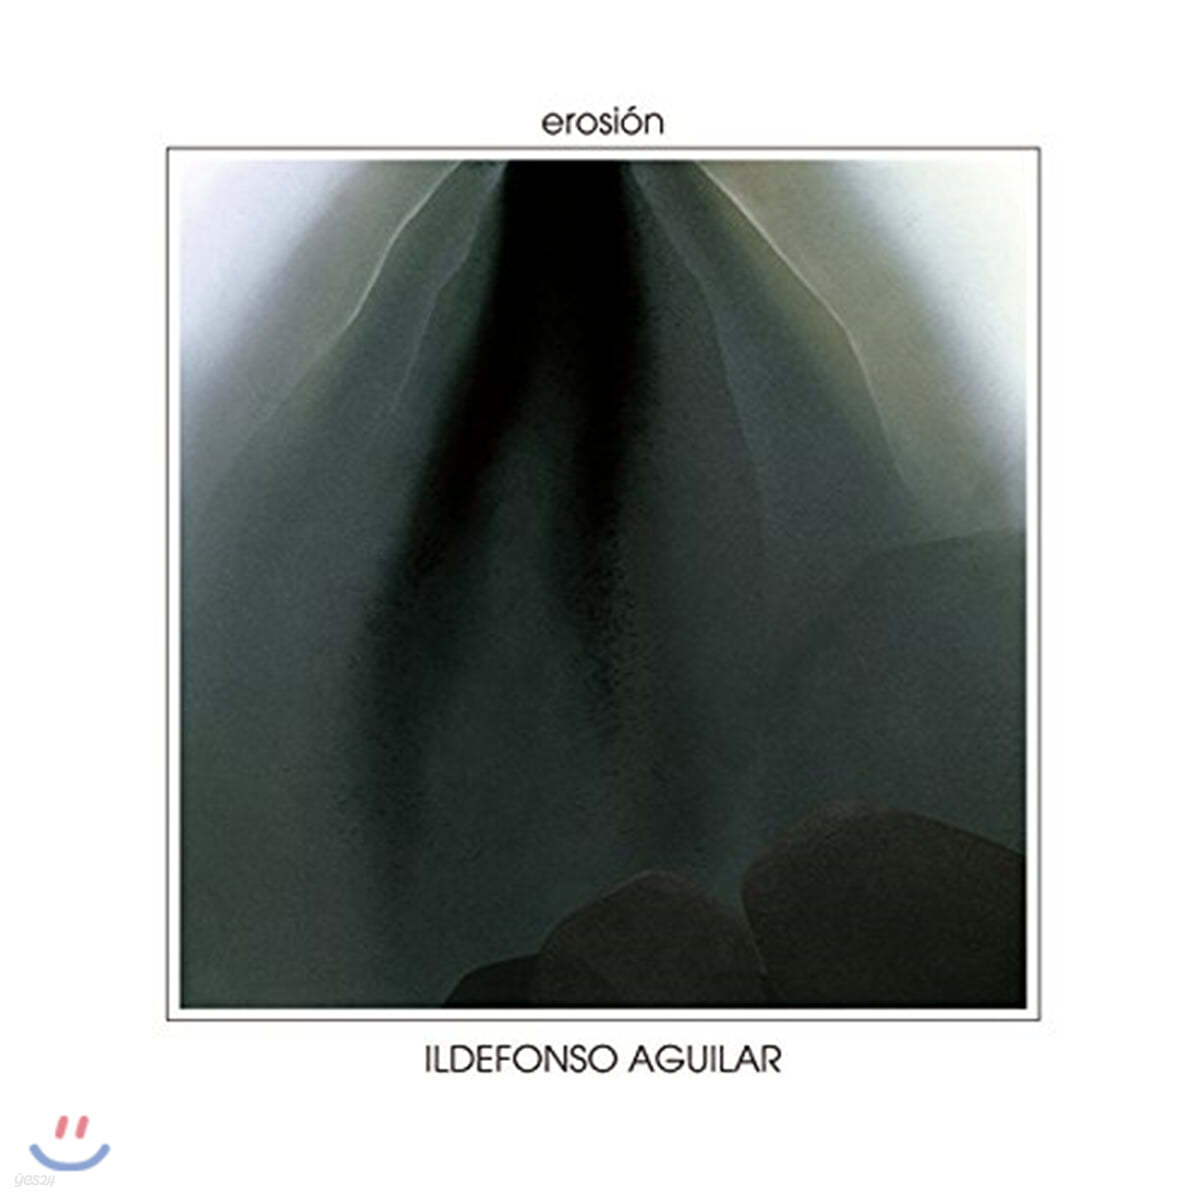 Ildefonso Aguilar (일데폰소 아귈라) - Erosion [2LP] 